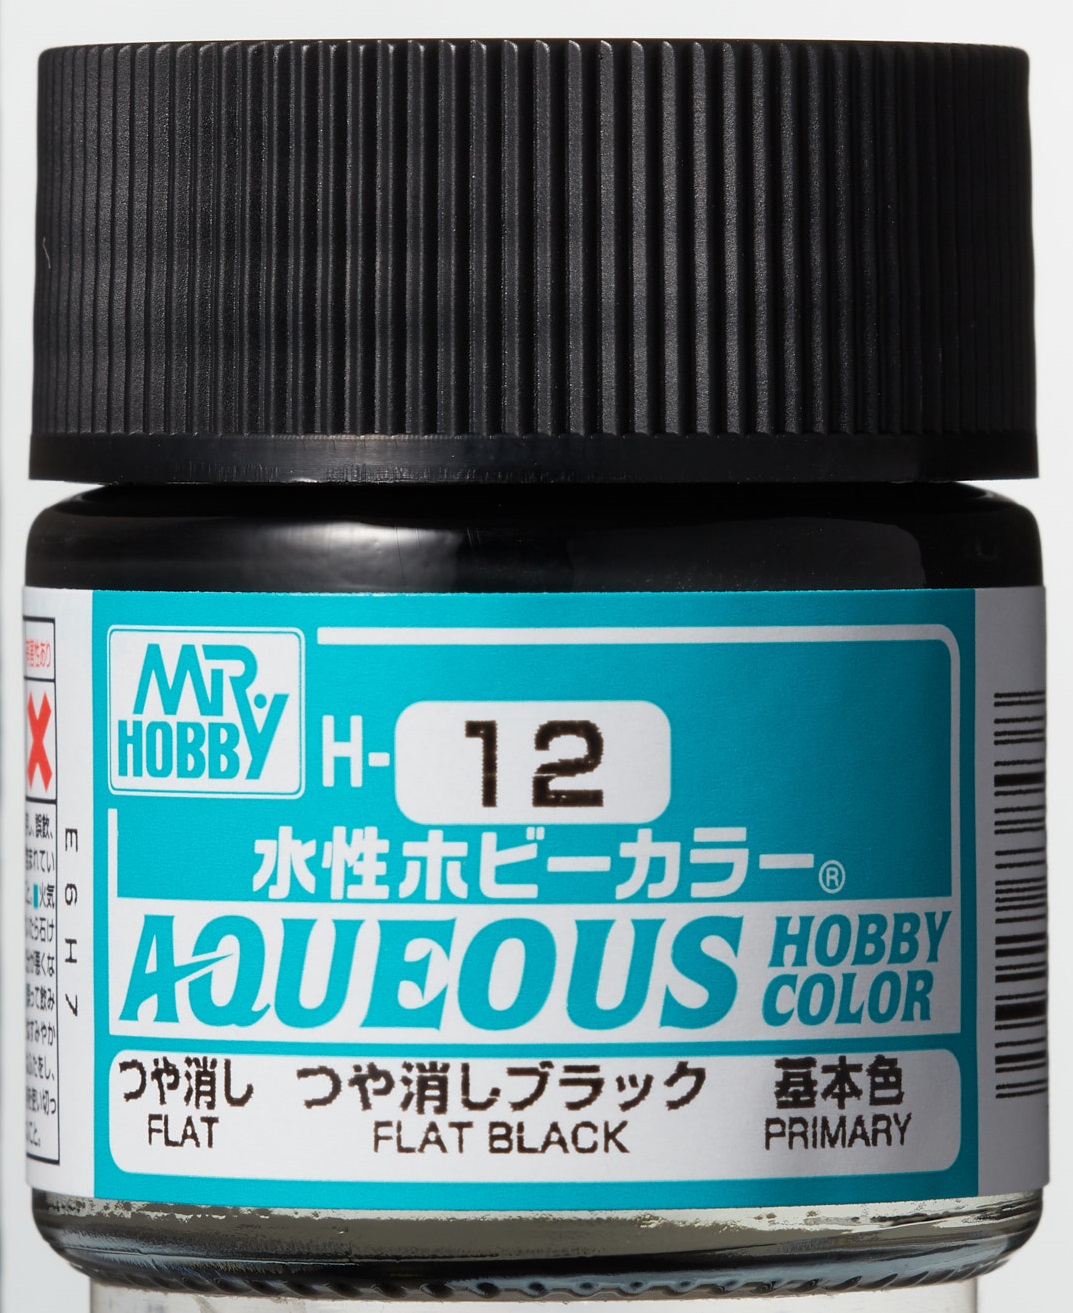 Mr. Aqueous Hobby Color - Flat Black - H12 - Schwarz Matt